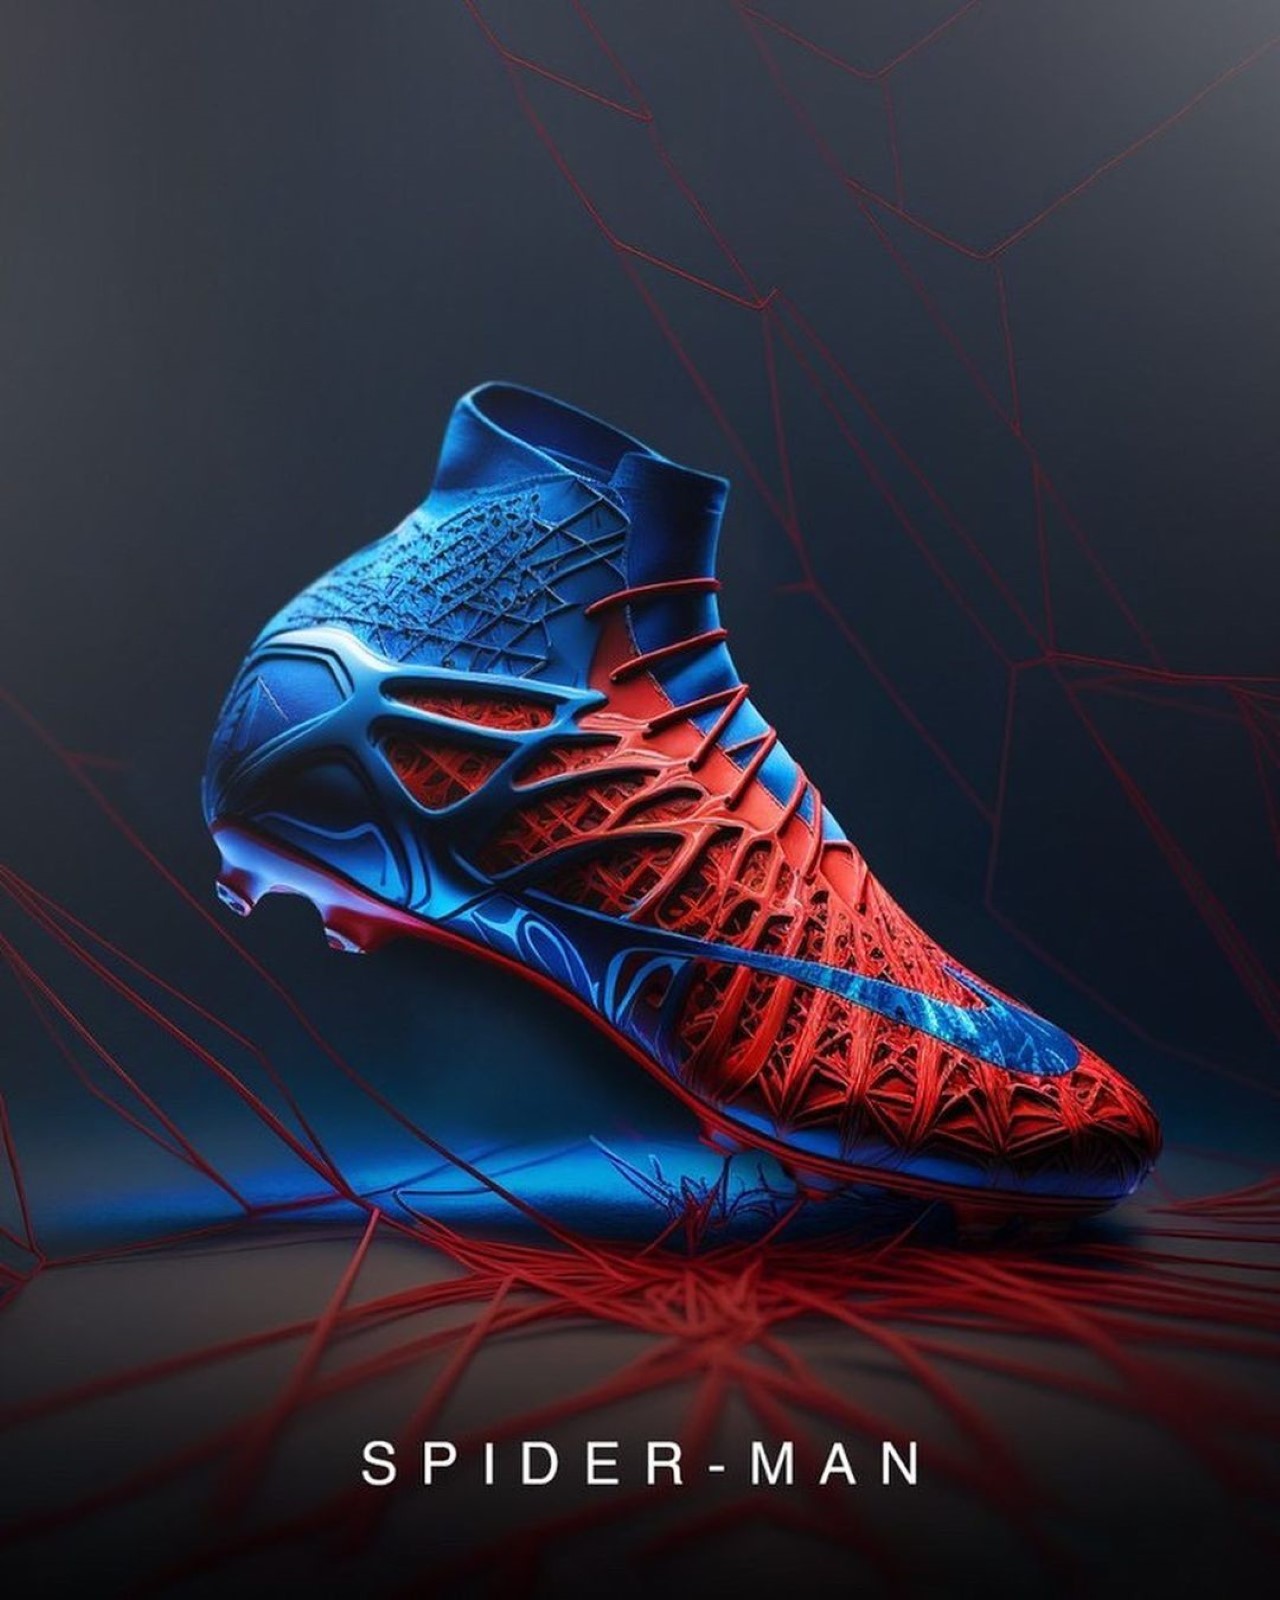 Chaussures de foot Nike x Marvel (concept)